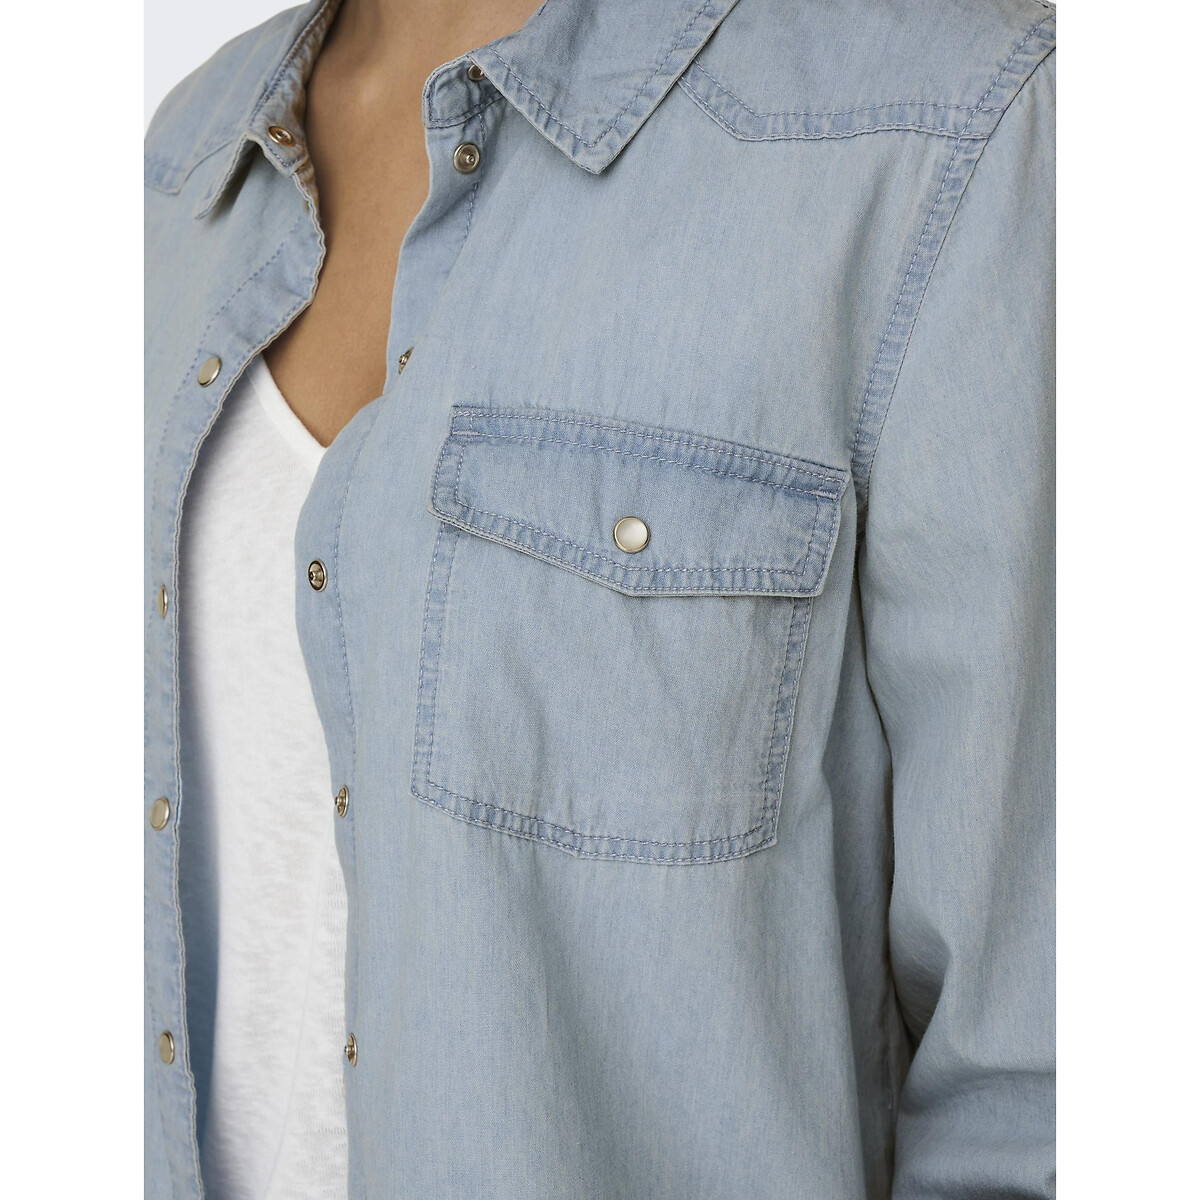 Рубашка из джинсовой ткани 100 хлопок  M синий LaRedoute, размер M - фото 2